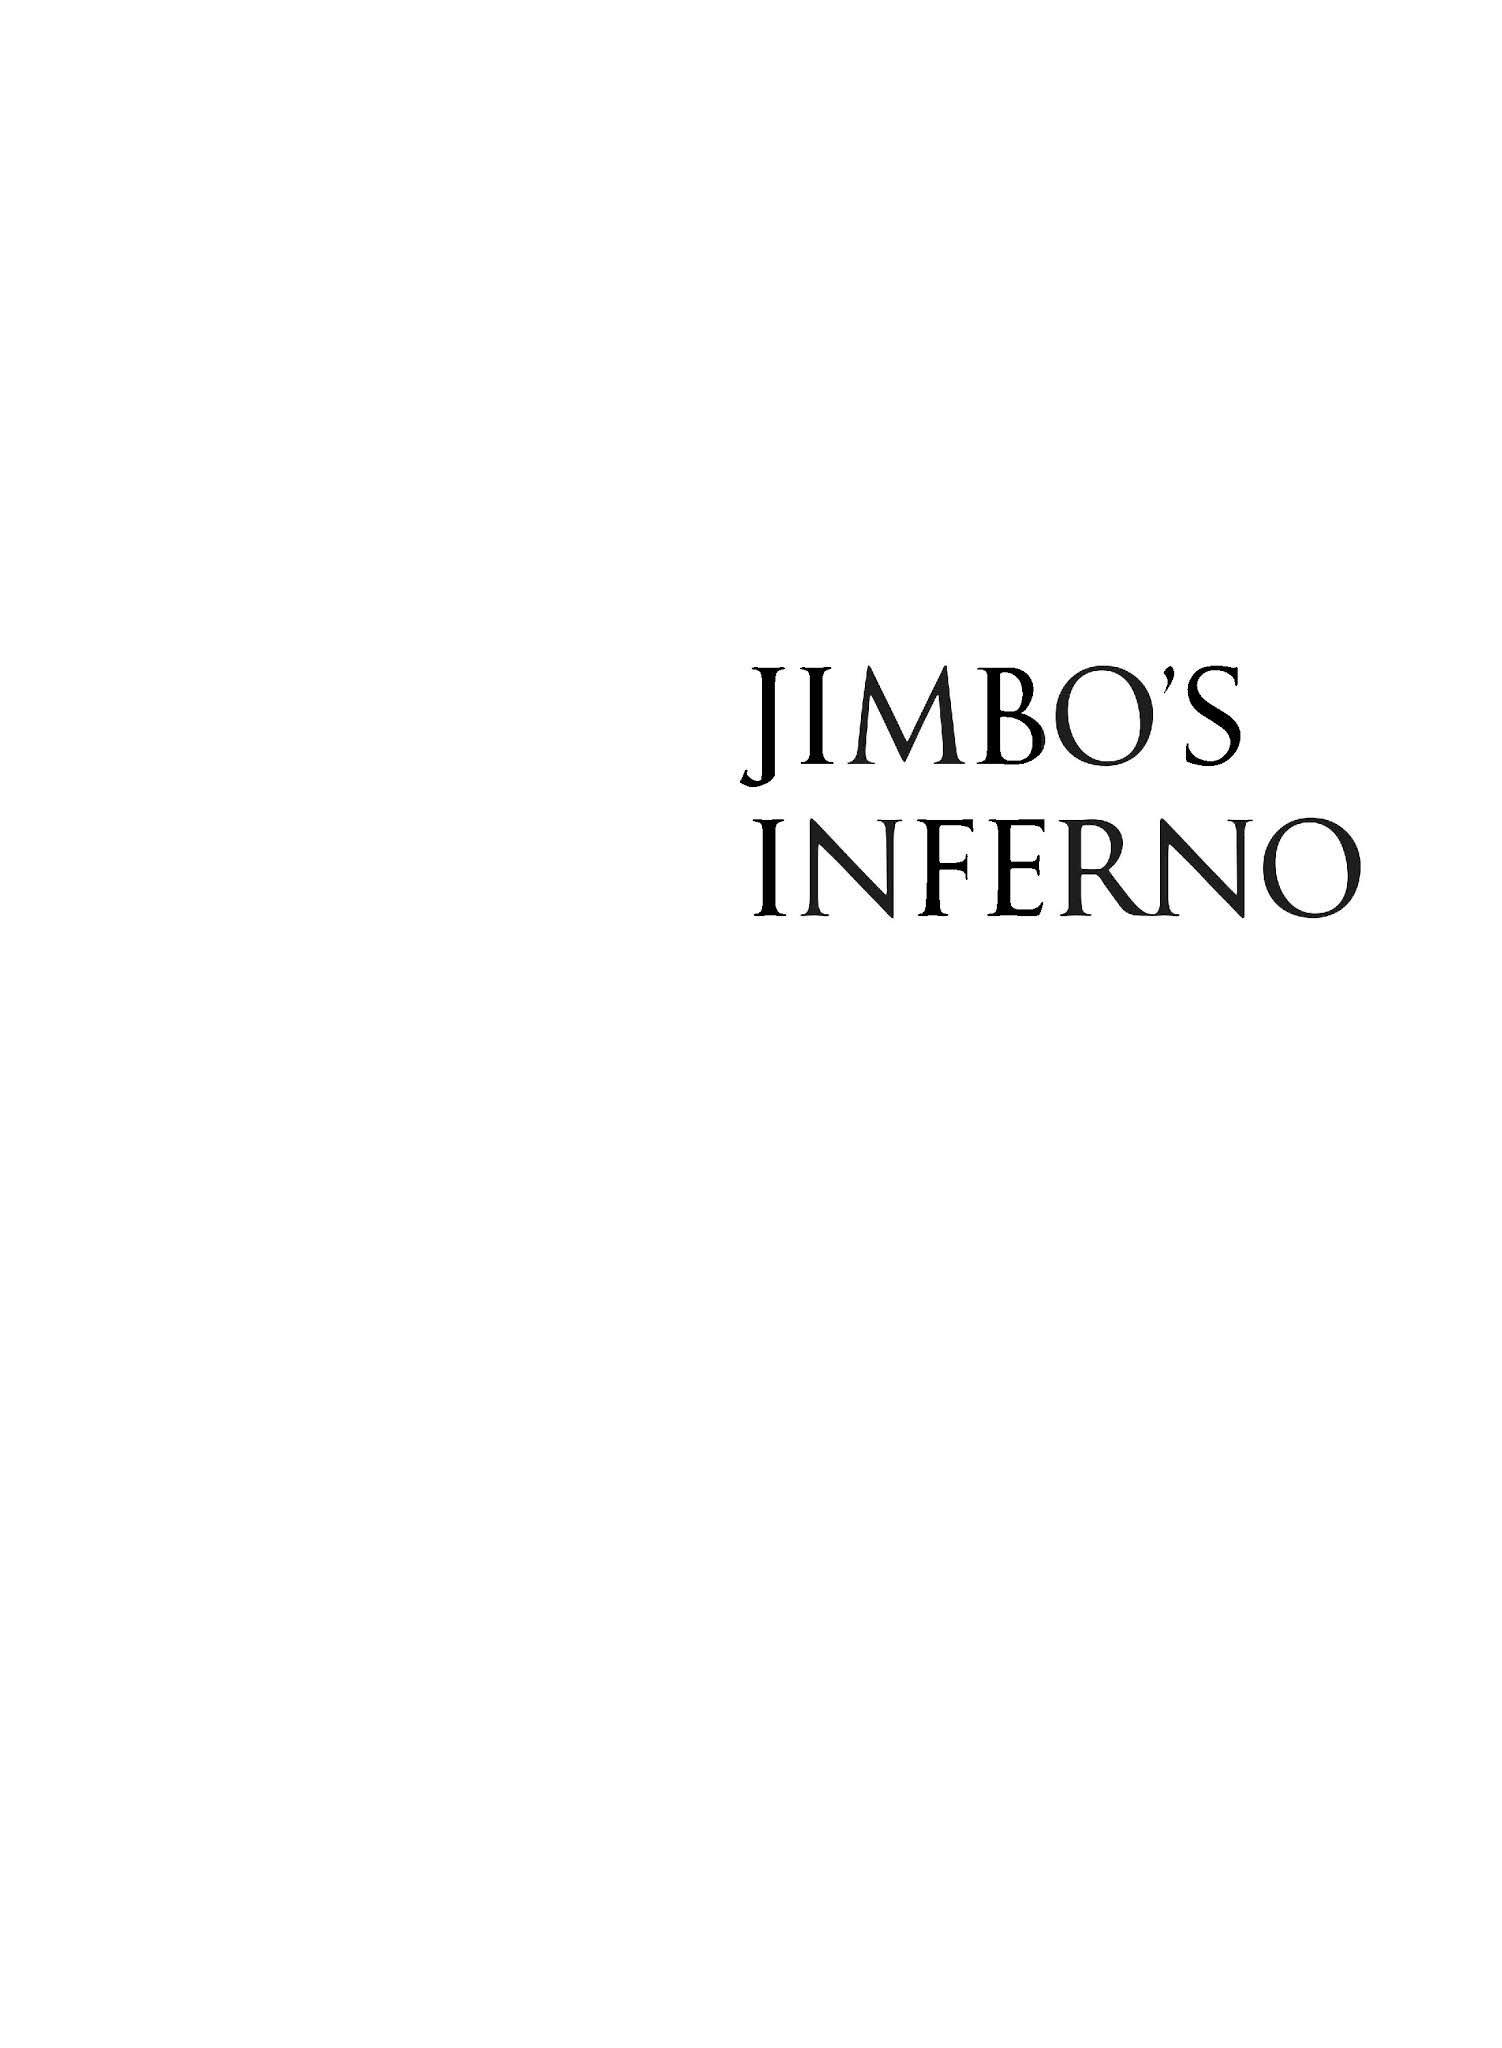 Read online Jimbo's Inferno comic -  Issue # Full - 2